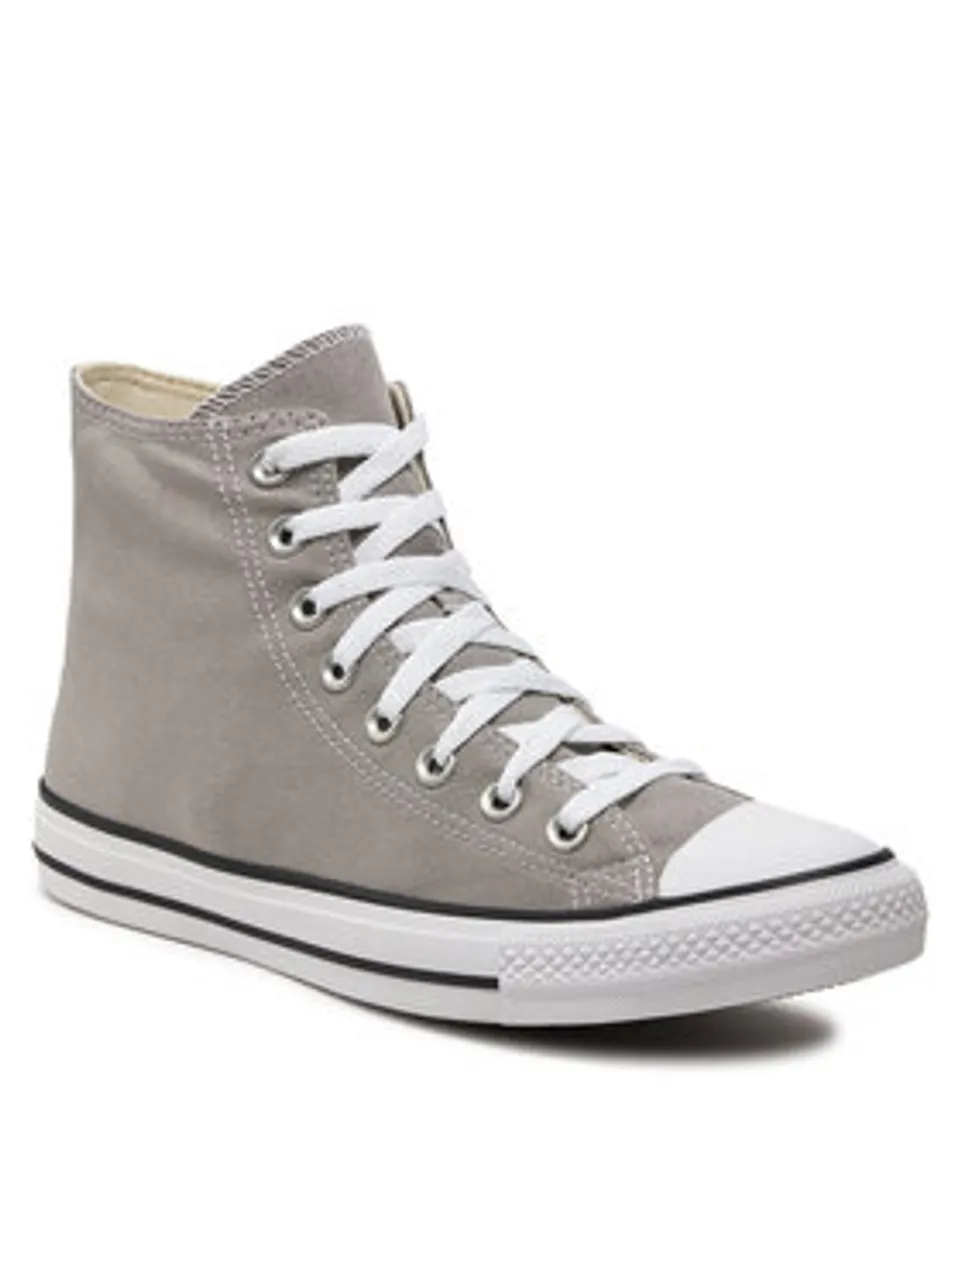 Converse Sneakers aus Stoff Chuck Taylor All Star A06561C Grau